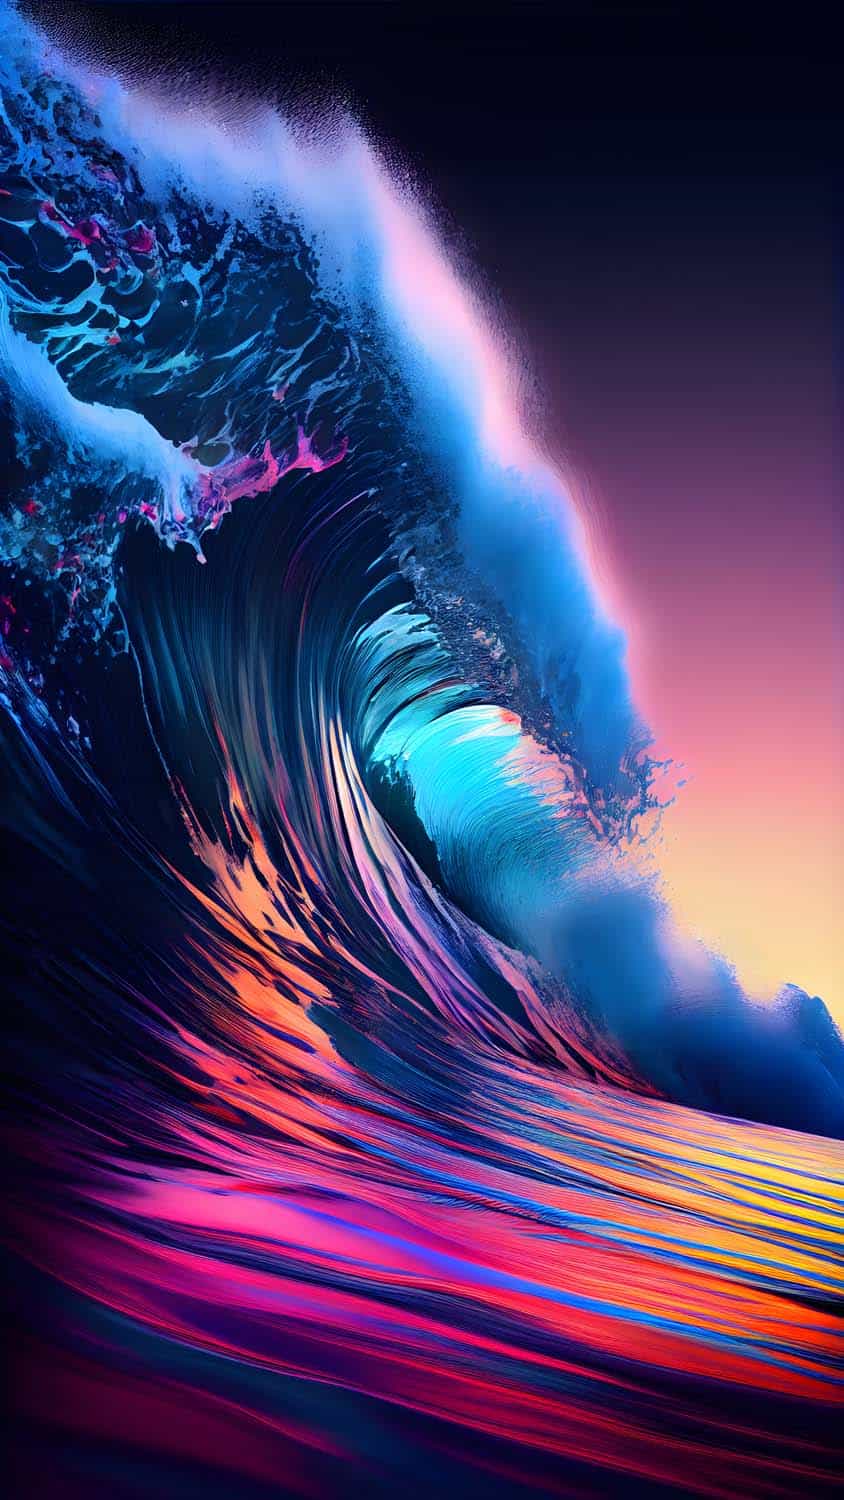 Water Waves iPhone Wallpaper HD